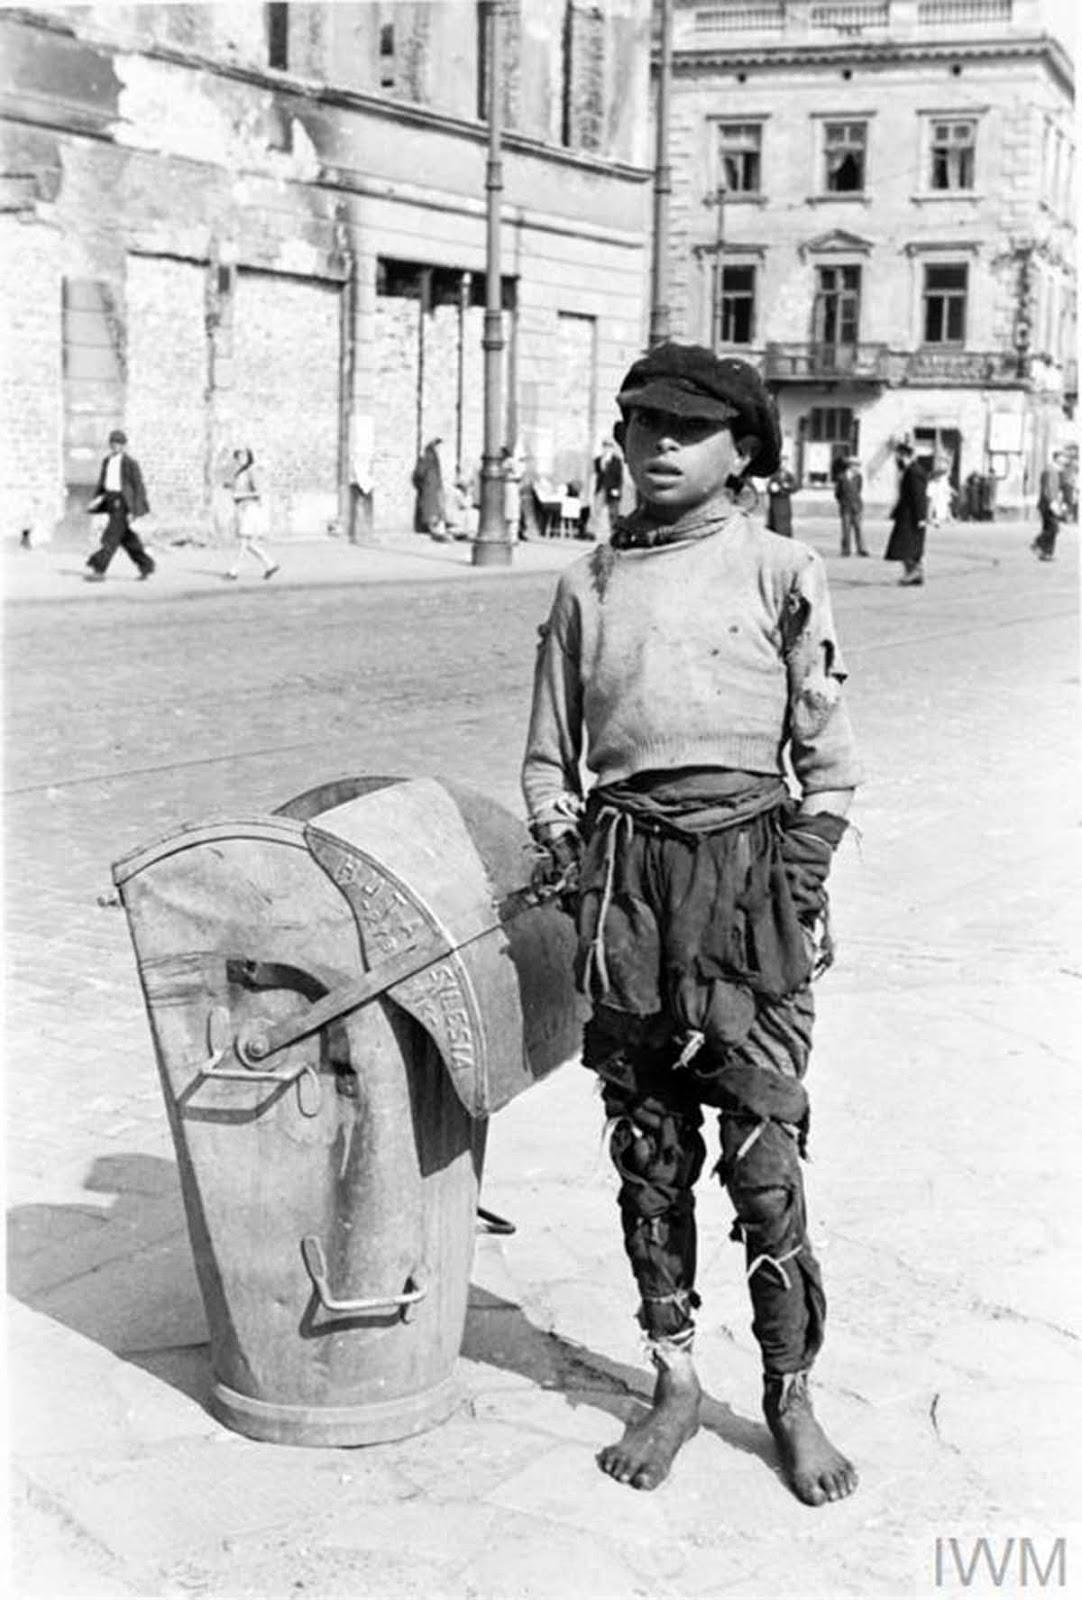 La vie quotidienne dans le Ghetto de Varsovie, 1941